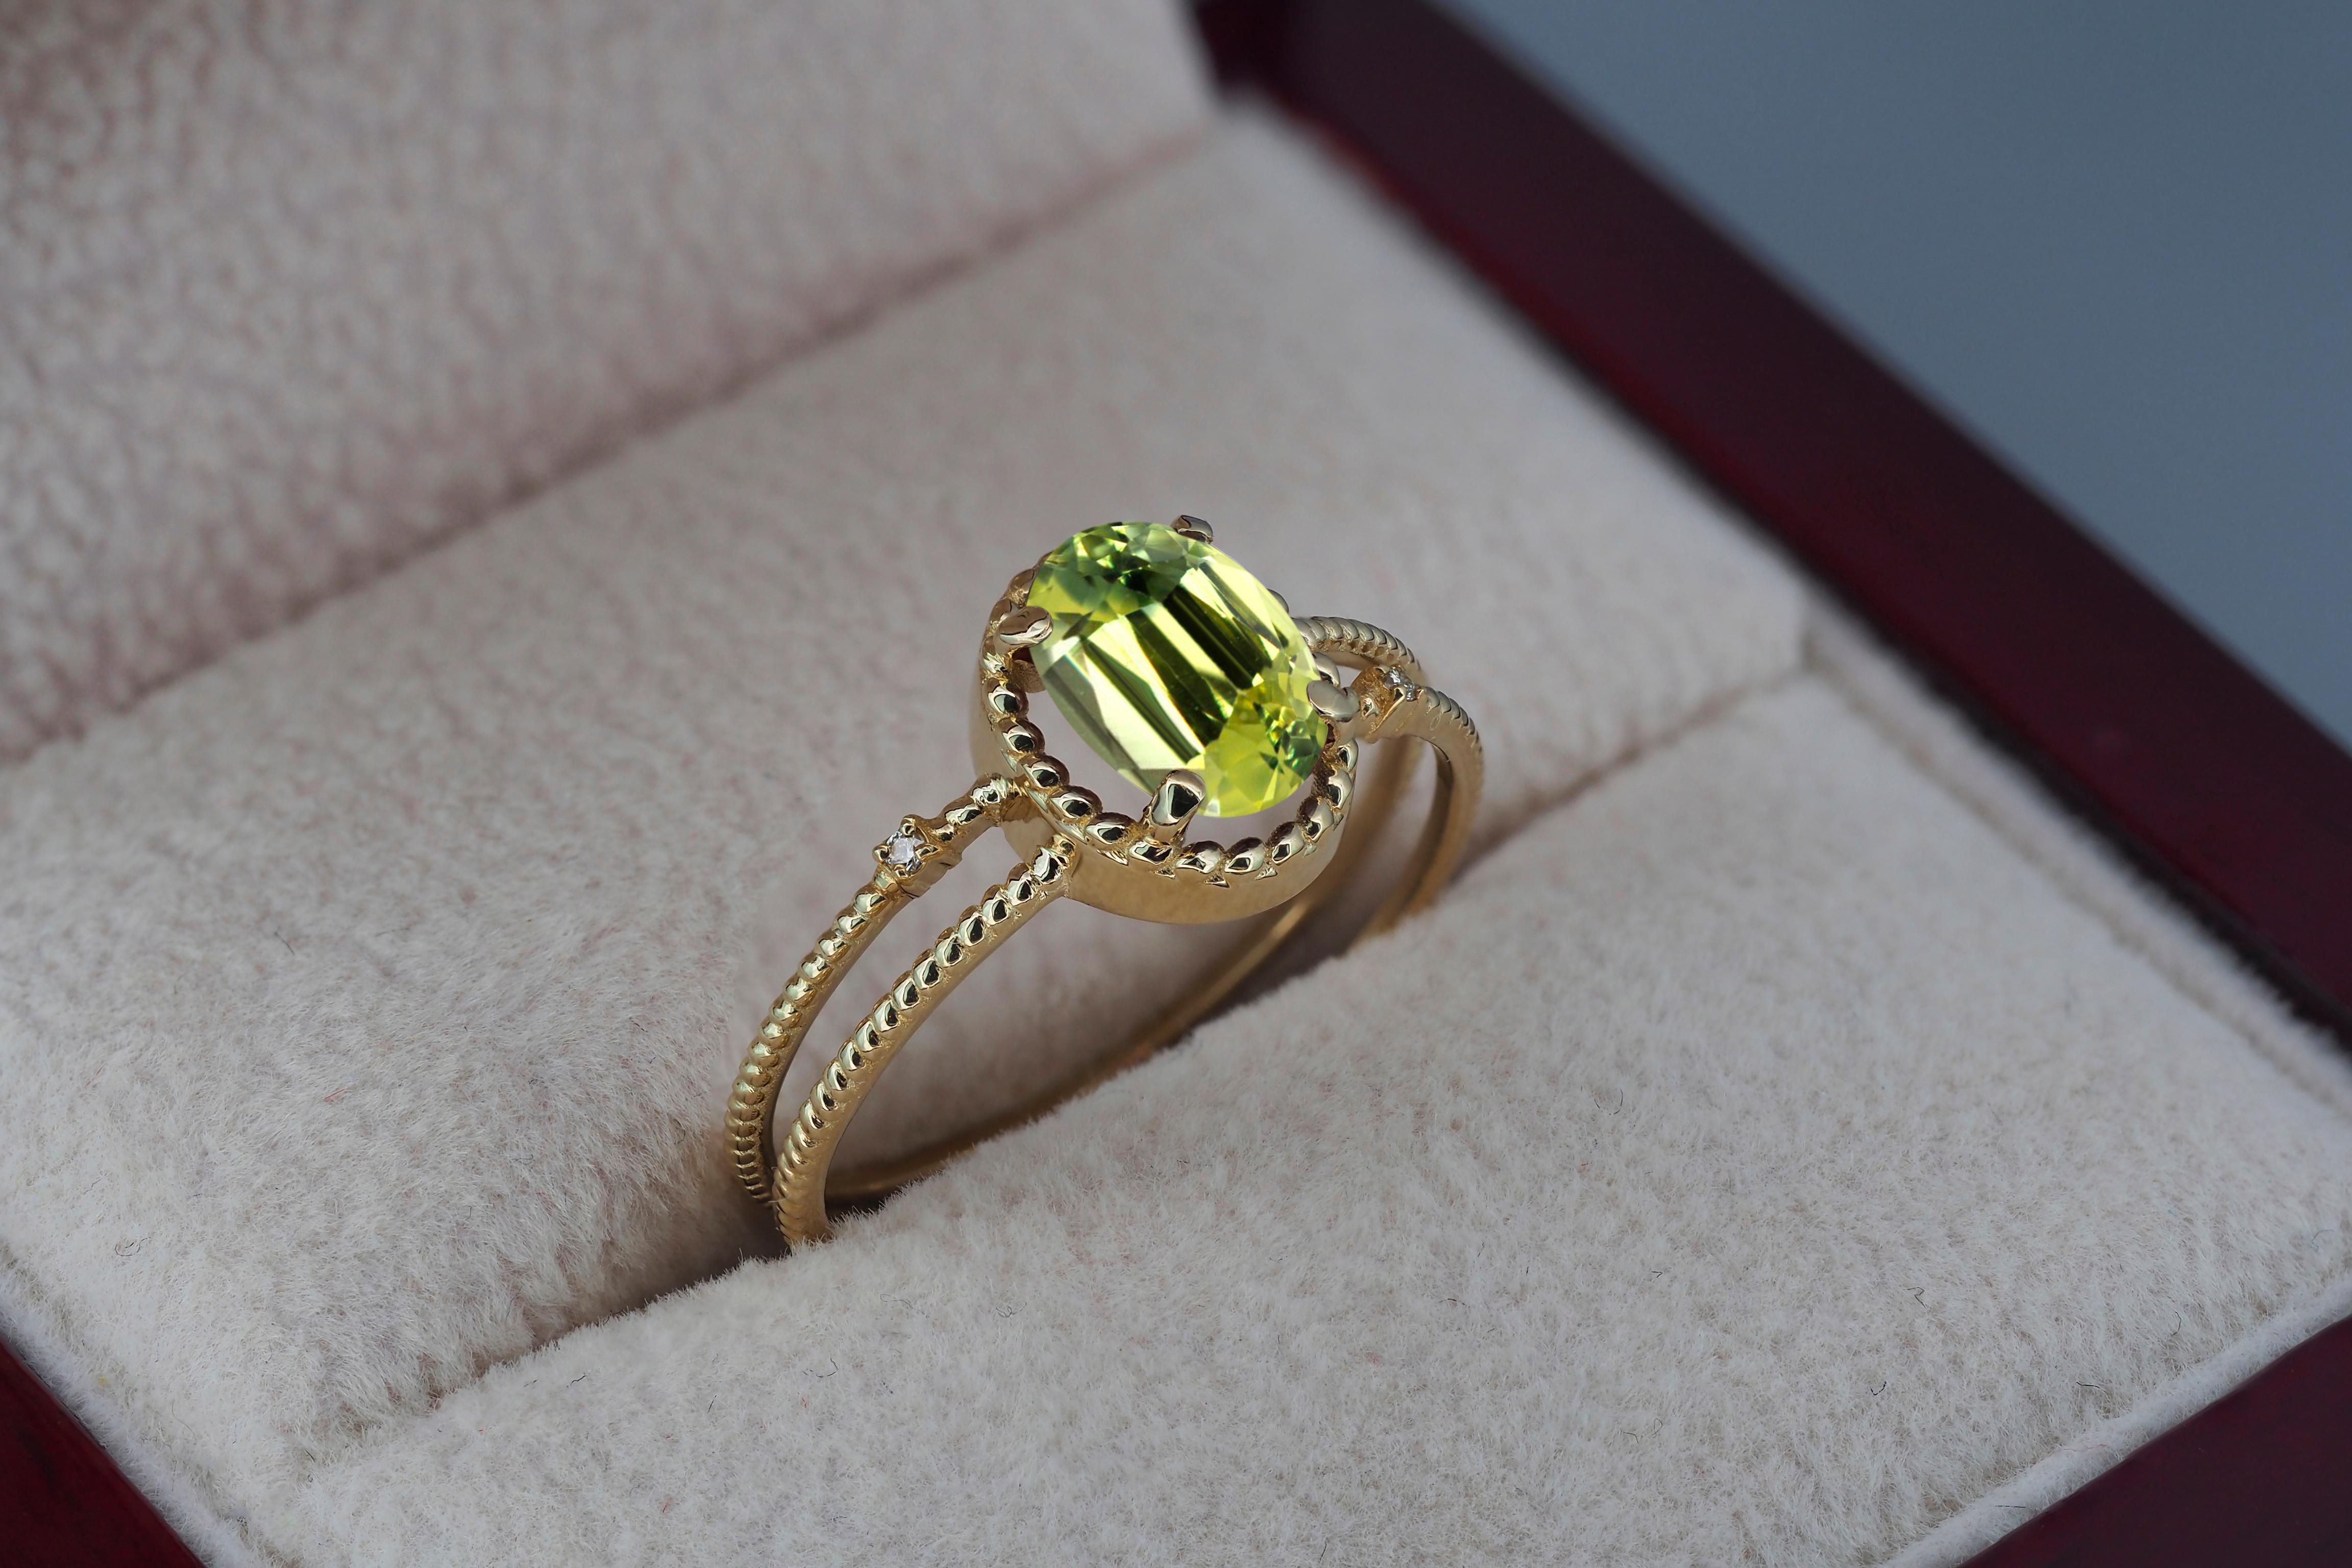 For Sale:  Oval Peridot Ring, 14k Gold Ring with Peridot, Minimalist Peridot Ring 6